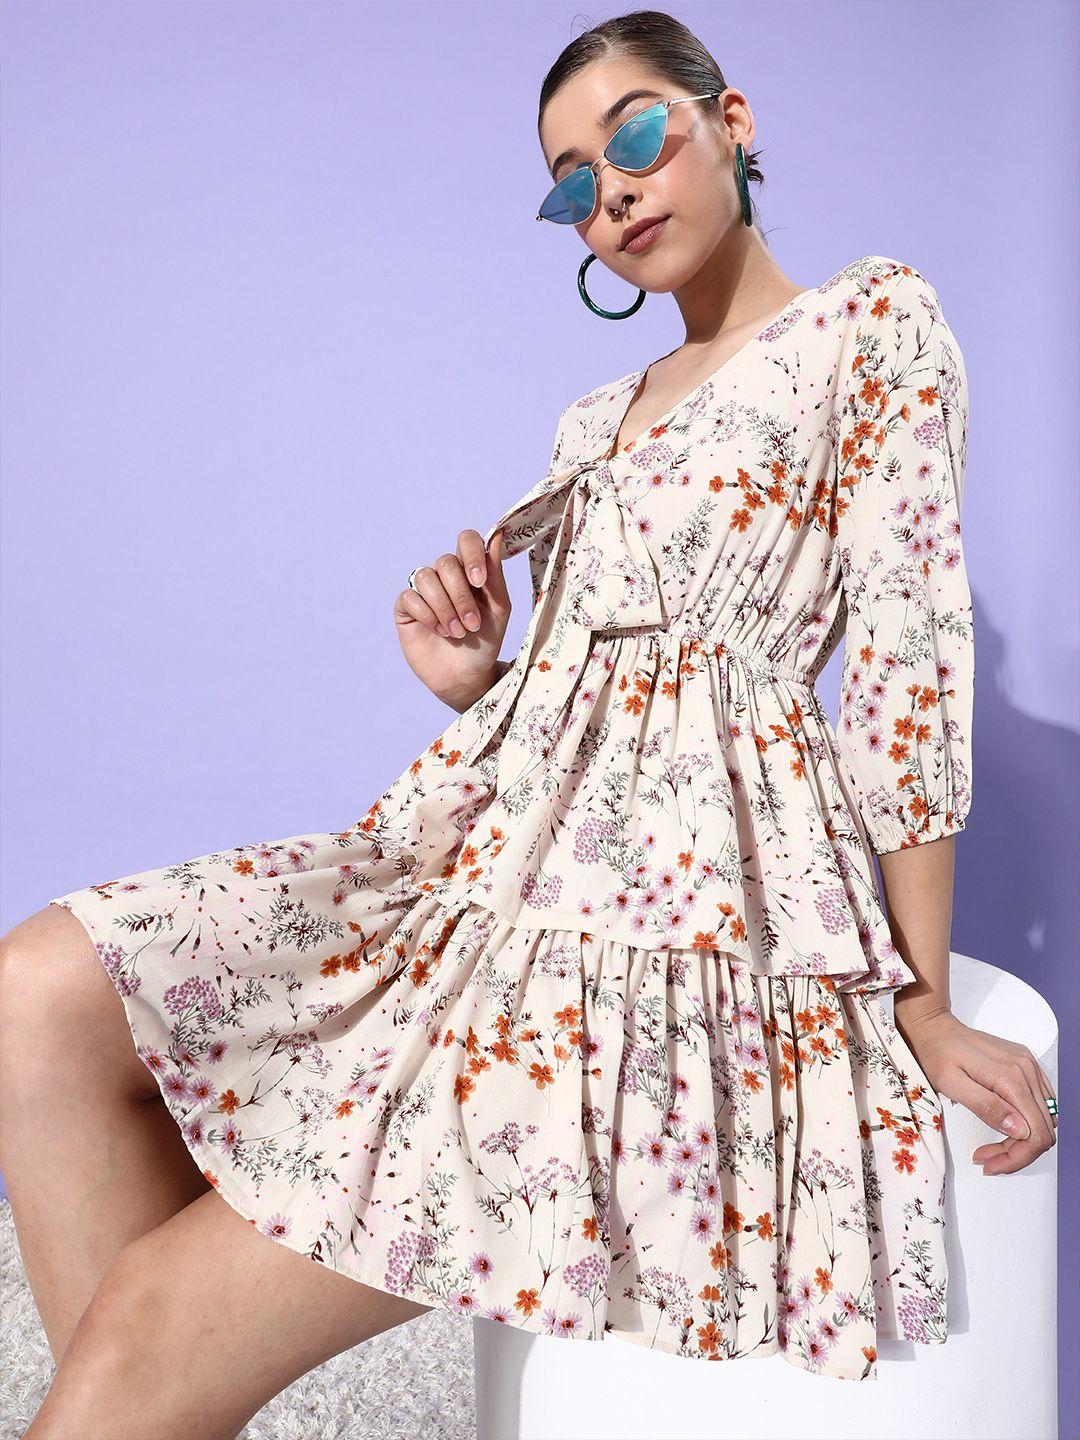 style quotient women classy cream floral feminine frills dress